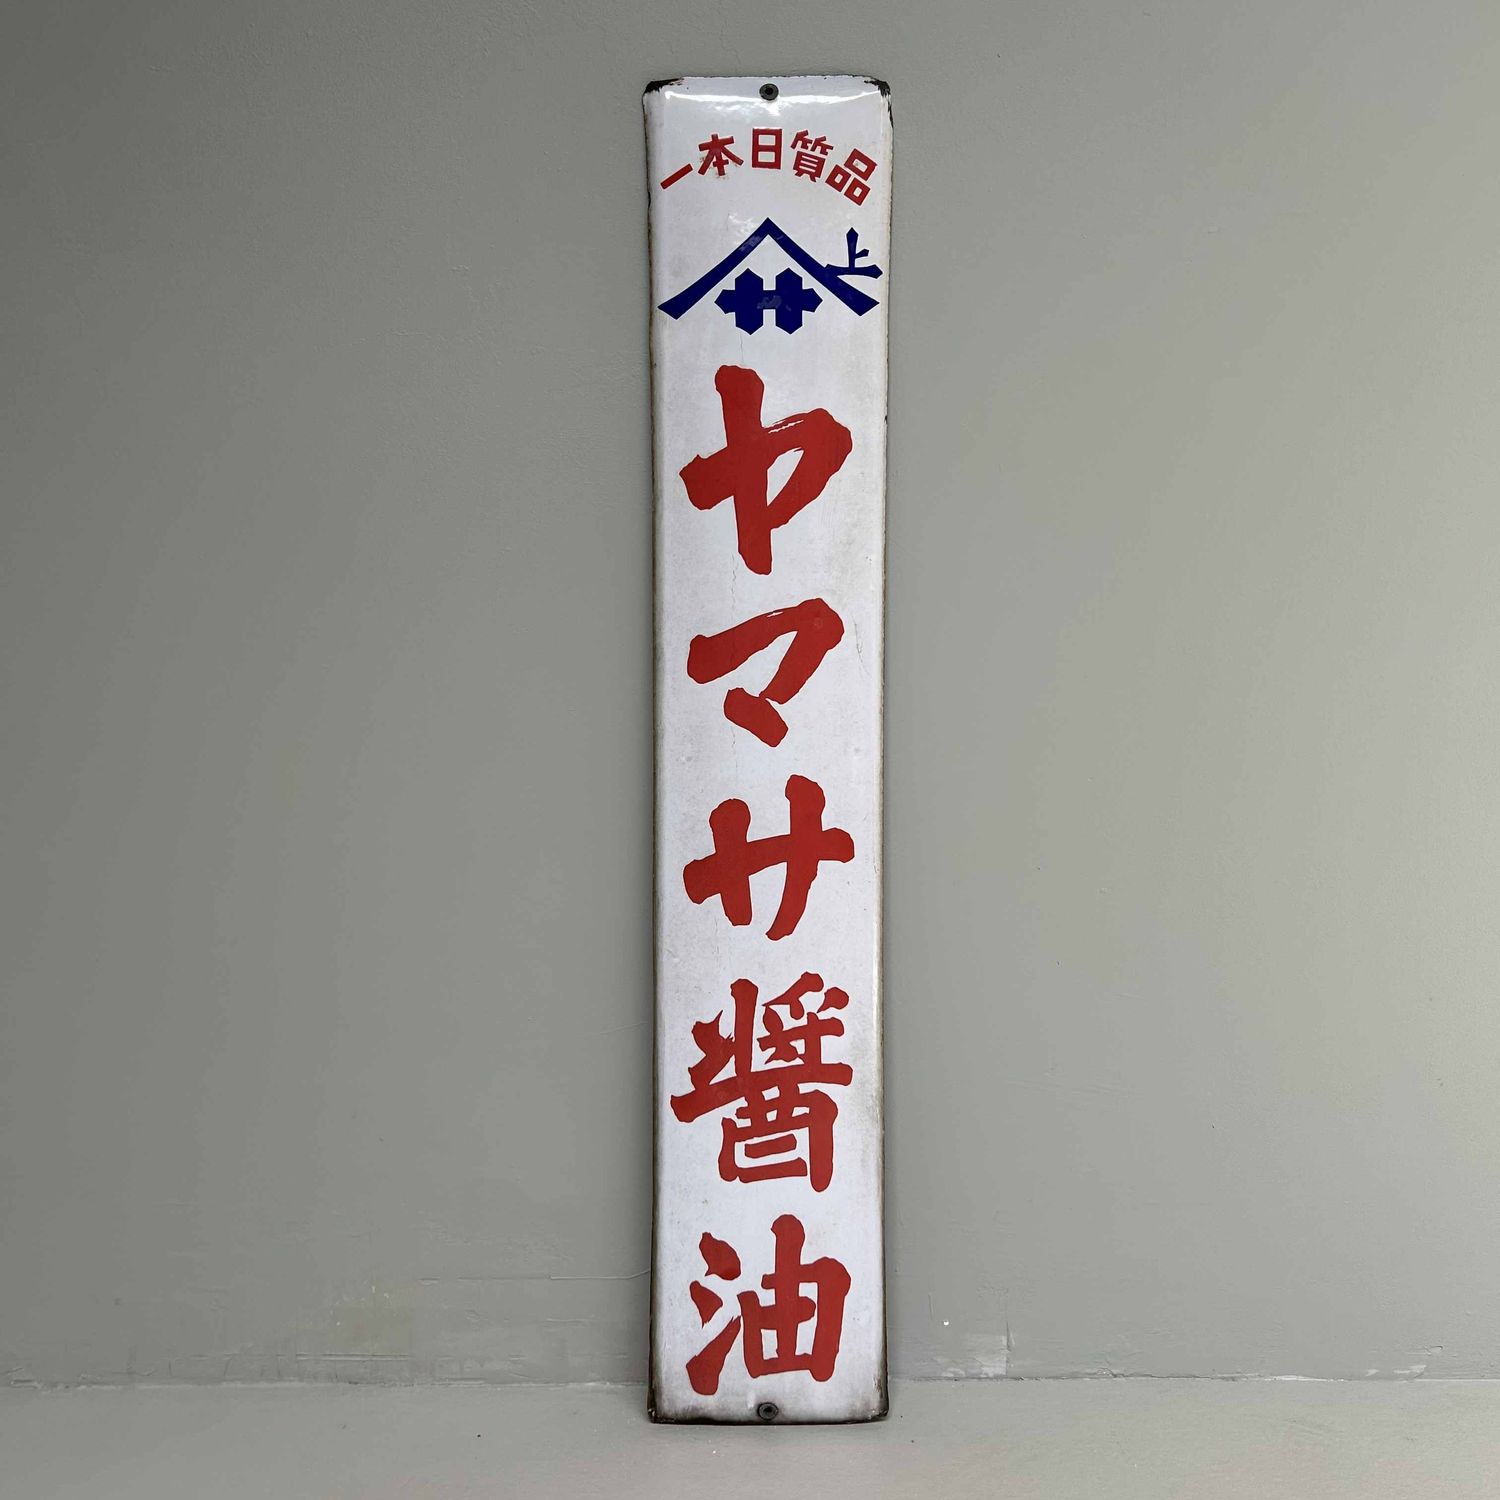 Enamel Advertising Board for Yamasa Soy Sauce, Shōwa Period, Japan.